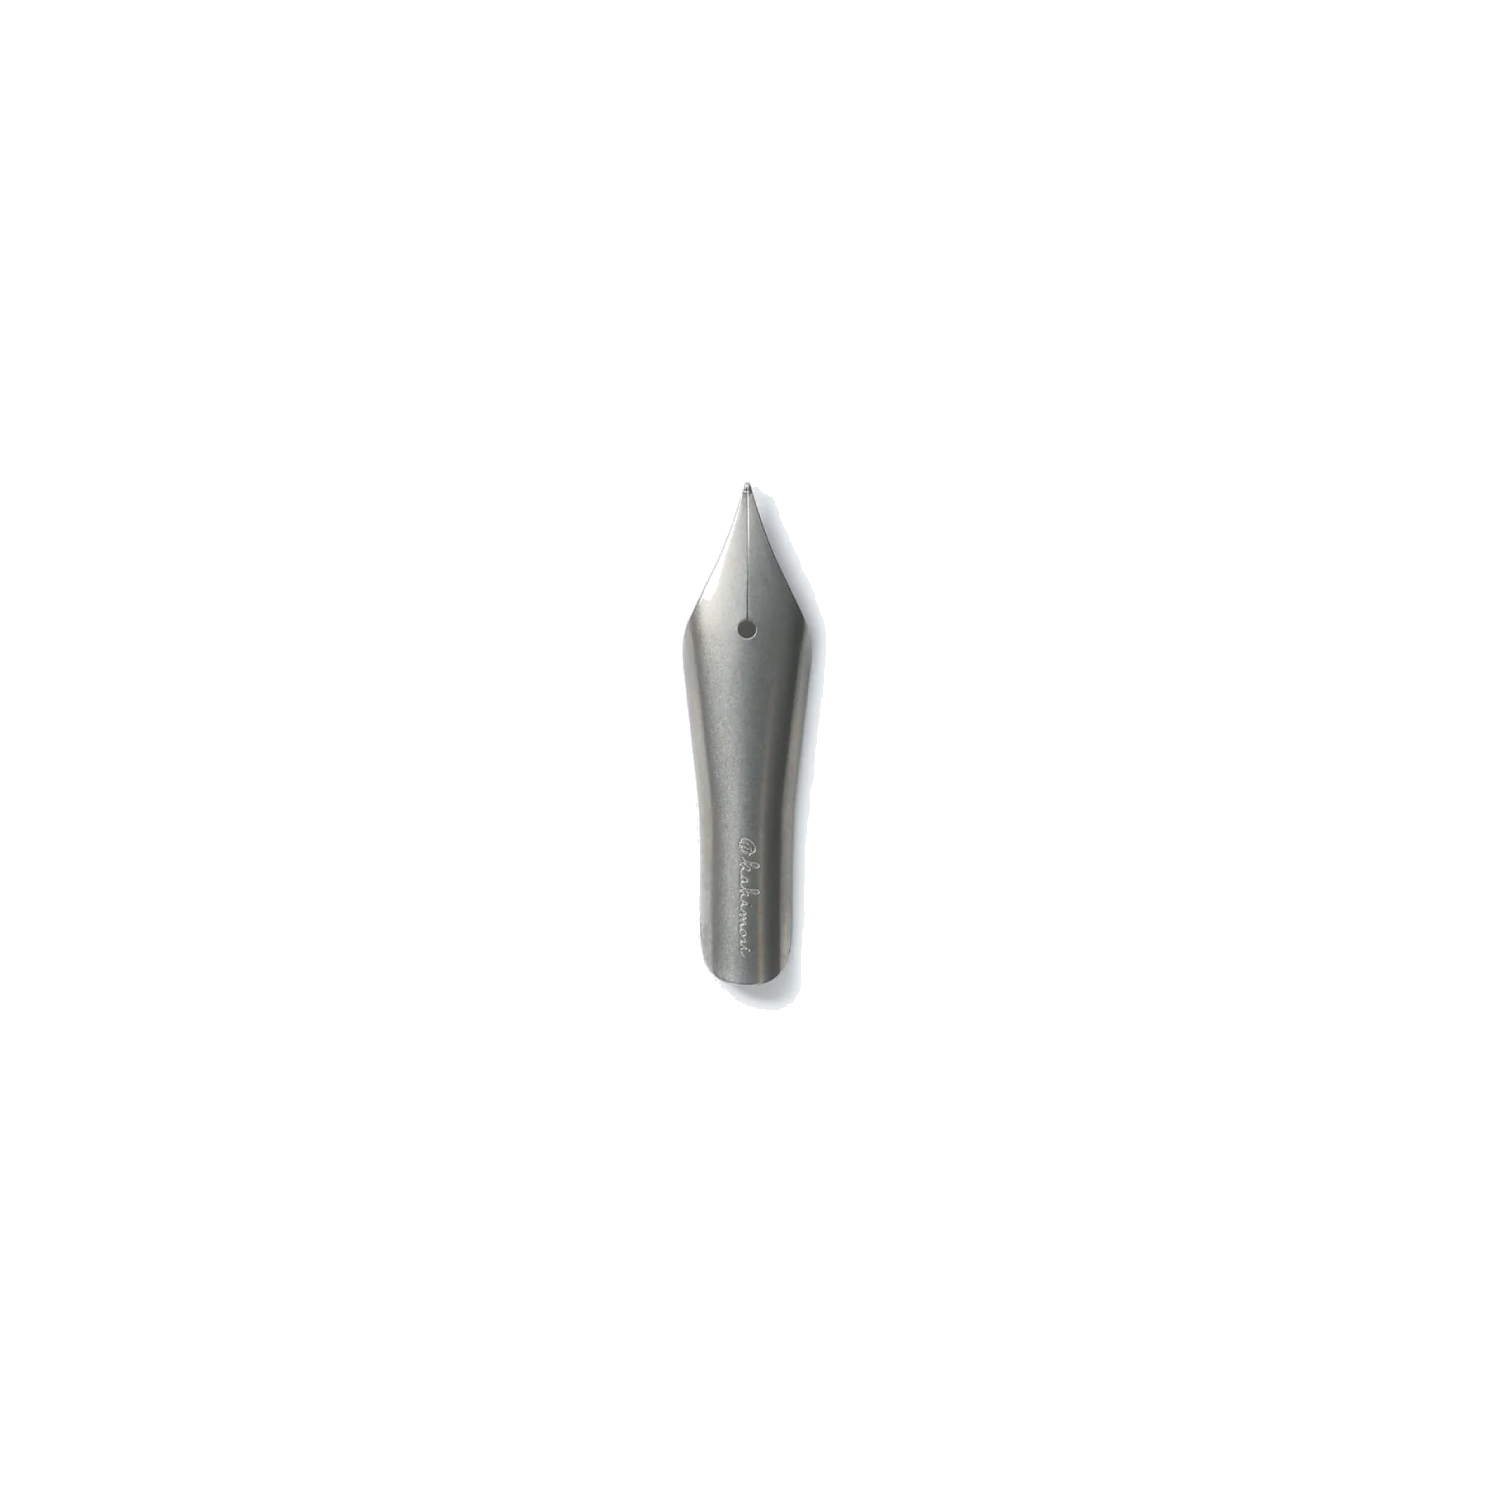 Stainless steel pen nib * Kakimori